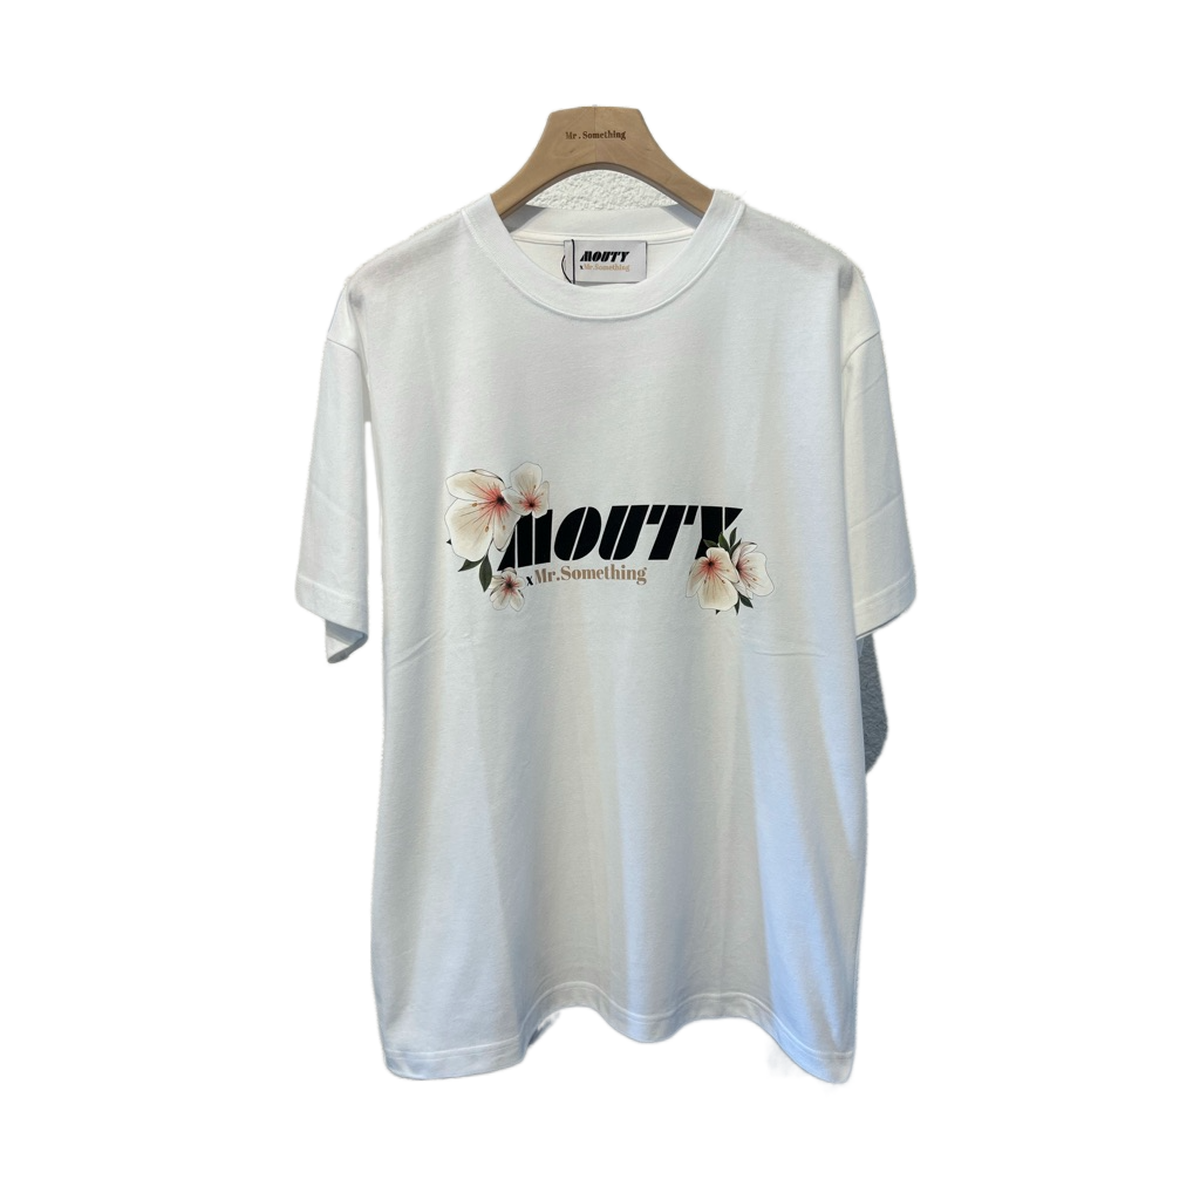 Mouty X Mr.something Flower White T-shirt